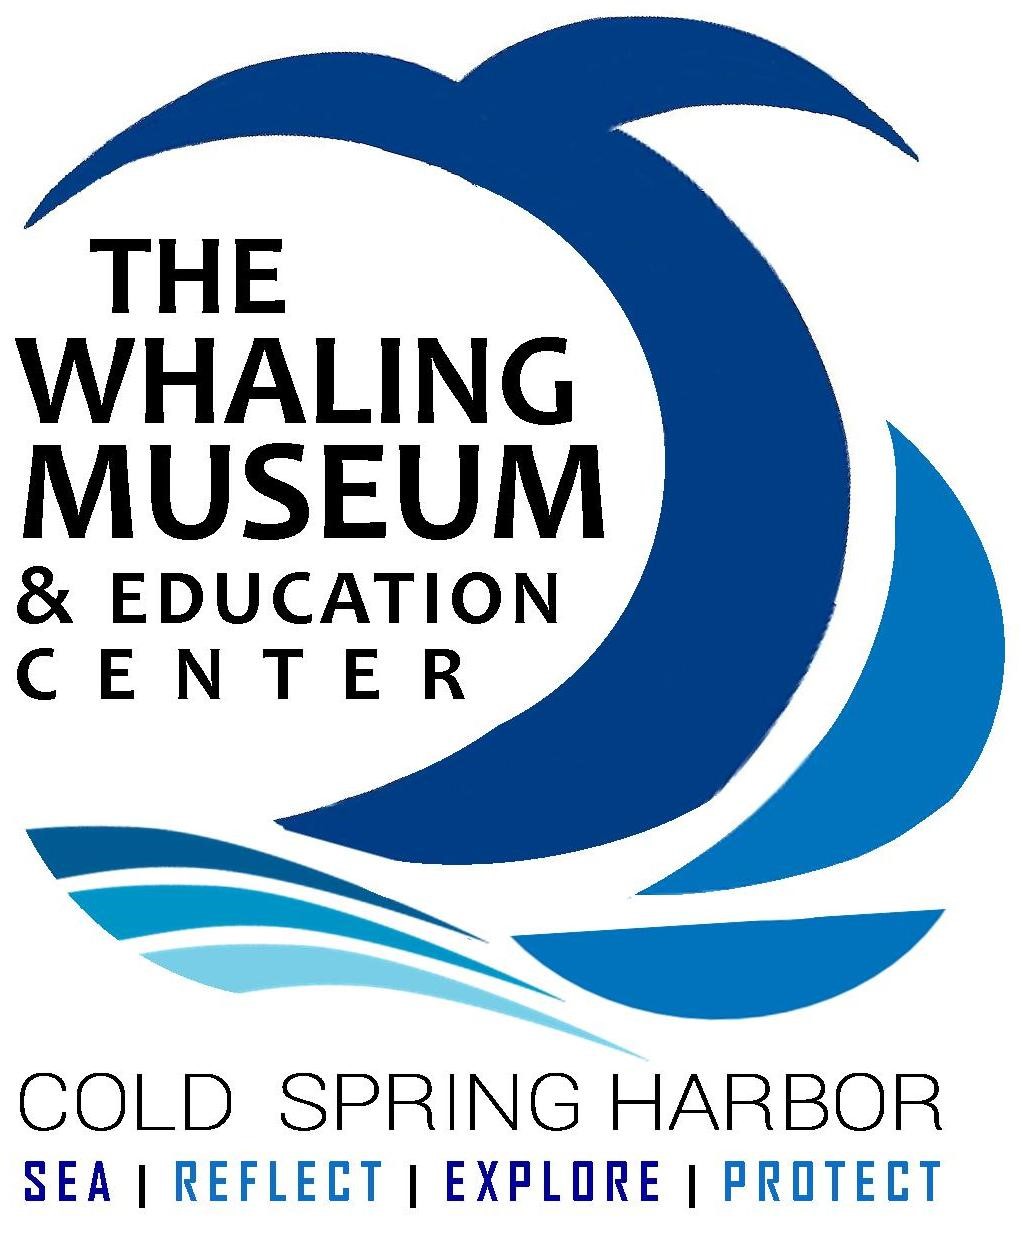 Whaling museum logo.jpg